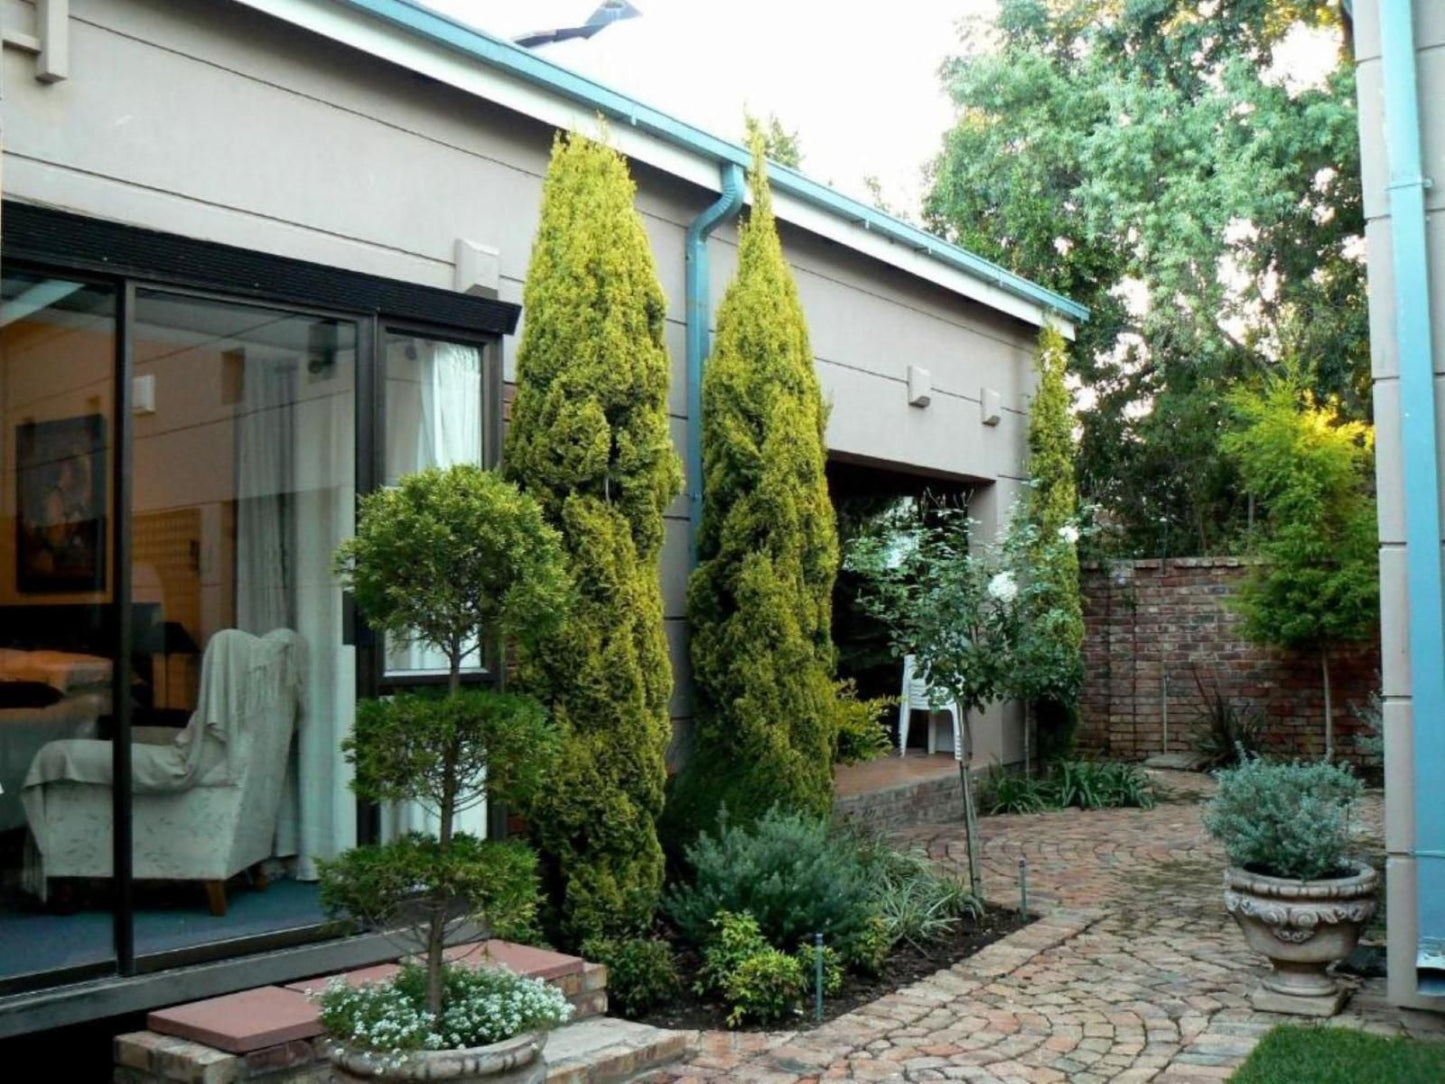 Primavera Waverley Bloemfontein Free State South Africa House, Building, Architecture, Plant, Nature, Tree, Wood, Garden